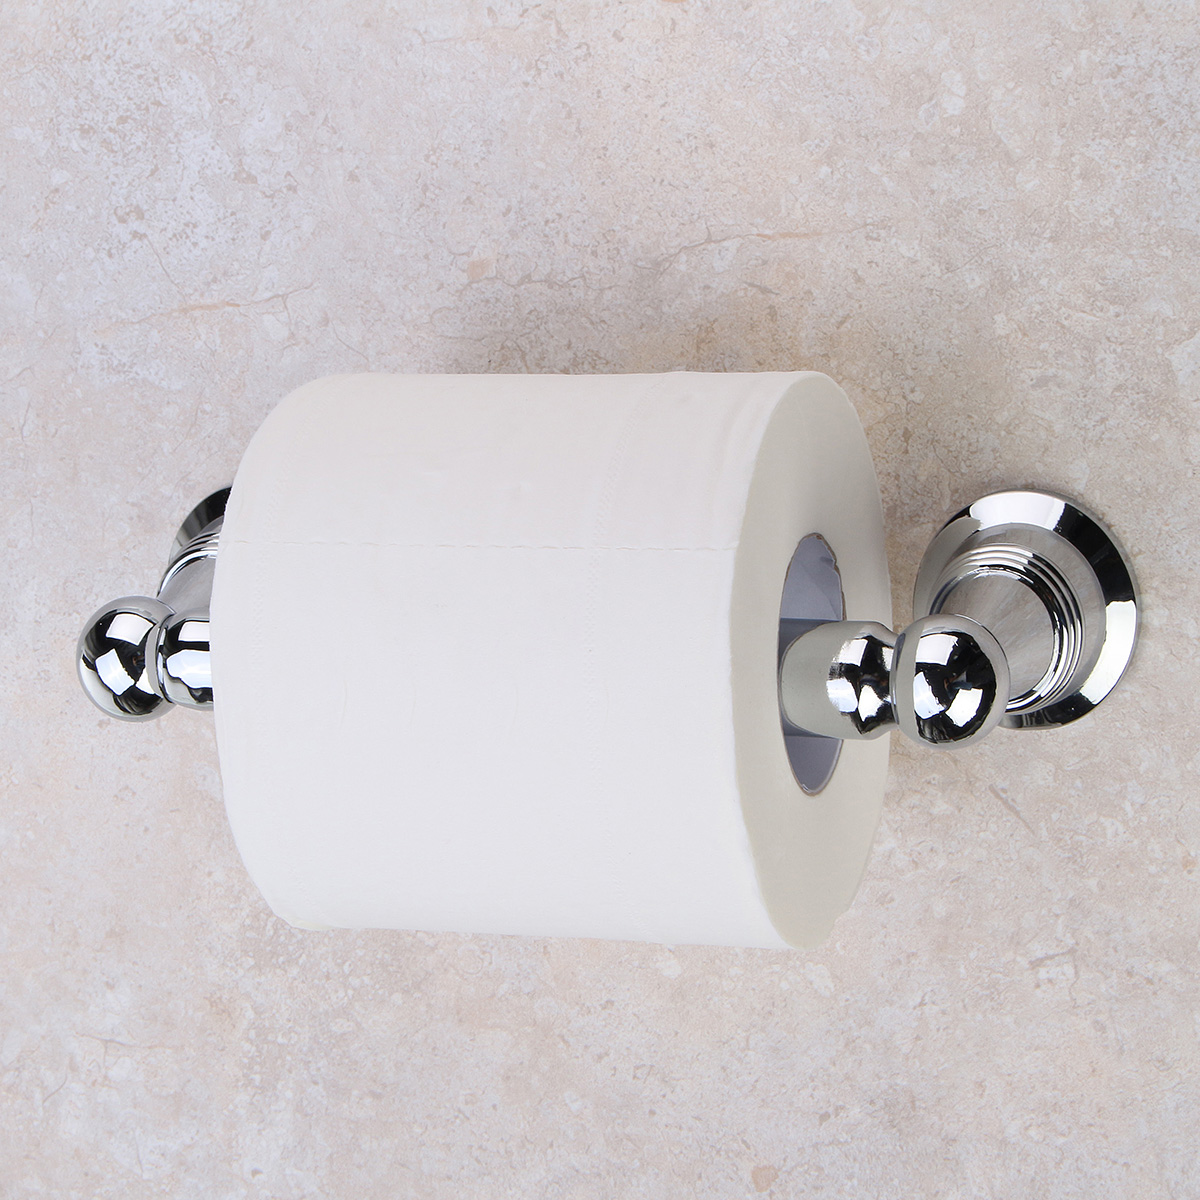 Stainless-Steel-Paper-Holder-Bar-Bathroom-Toilet-Paper-Roll-Tissue-Rack-Shelf-Wall-Mounted-1363697